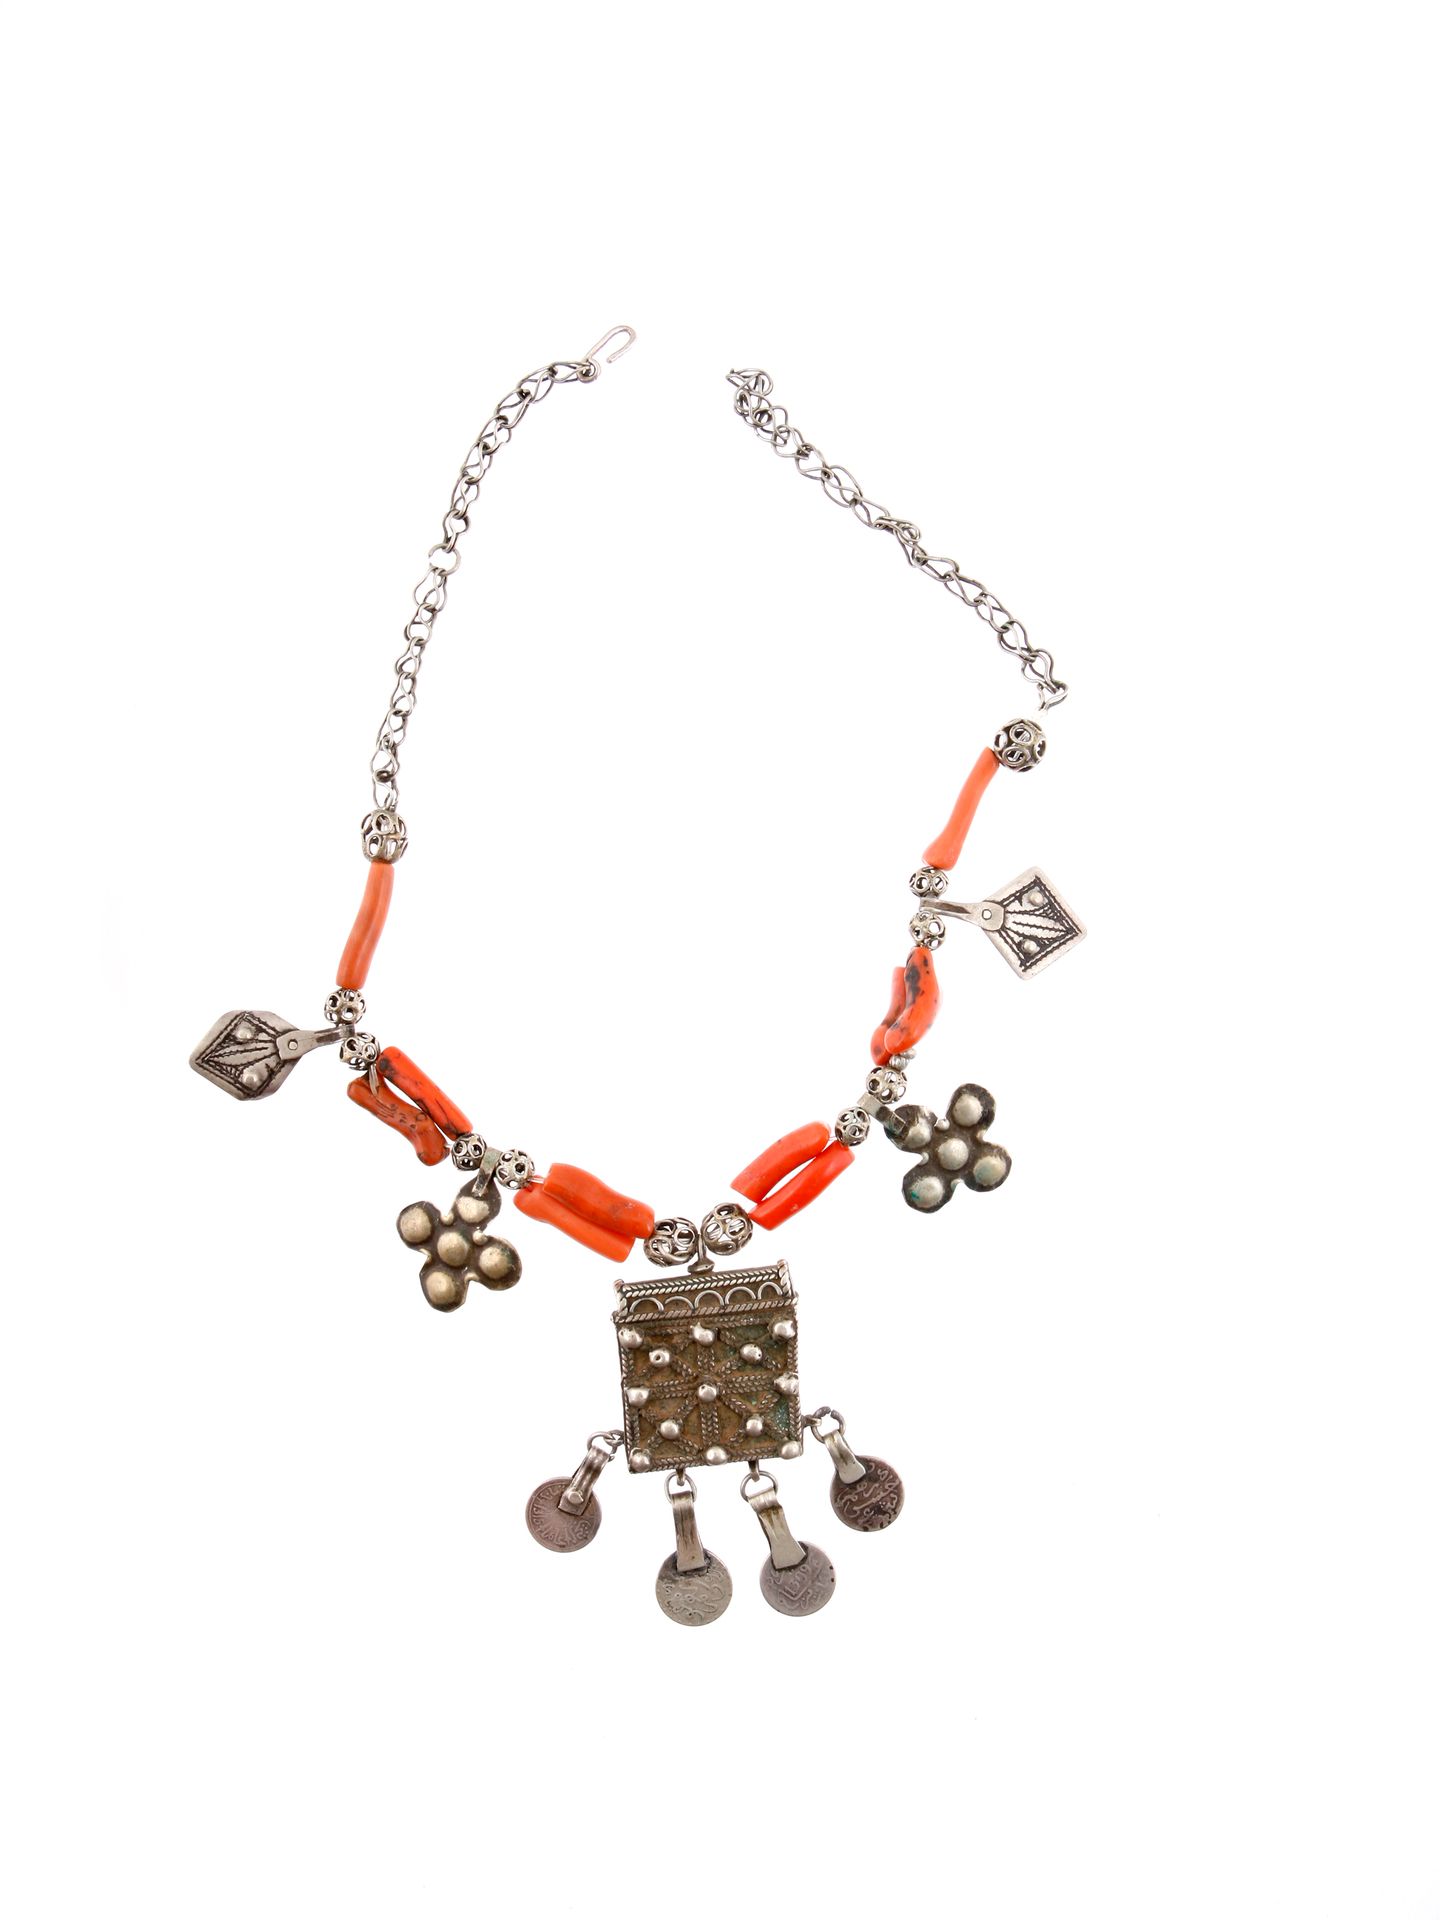 A Berber Necklace with five Pendants Collier mit fünf Schmuck-Anhängern

Berber,&hellip;